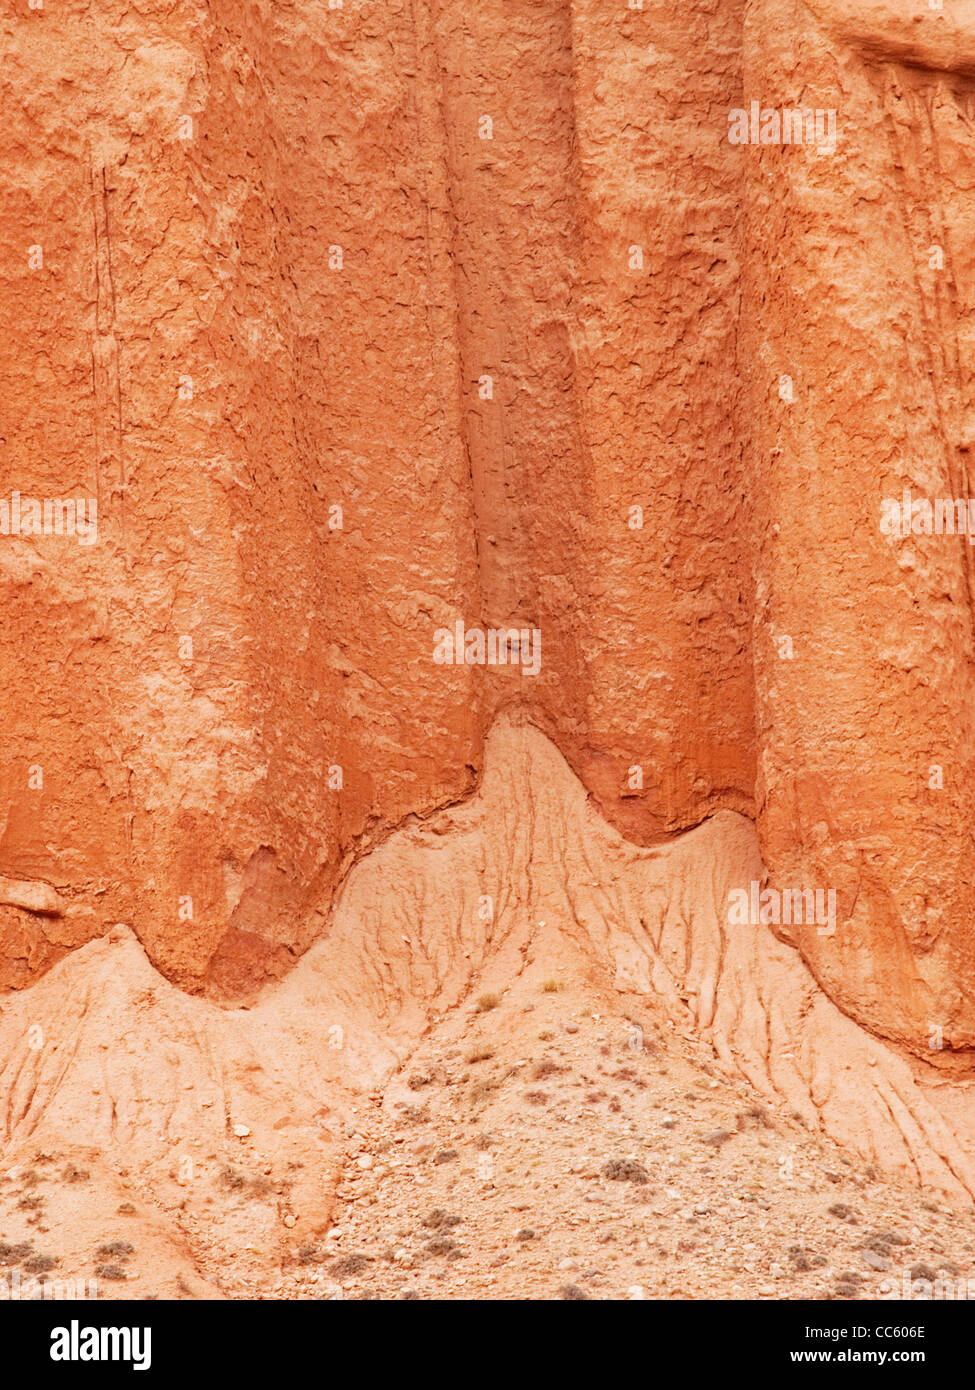 Details zu den erodierten Felsen, erfrischende Grand Canyon, Aksu Präfektur, Xinjiang, China Stockfoto